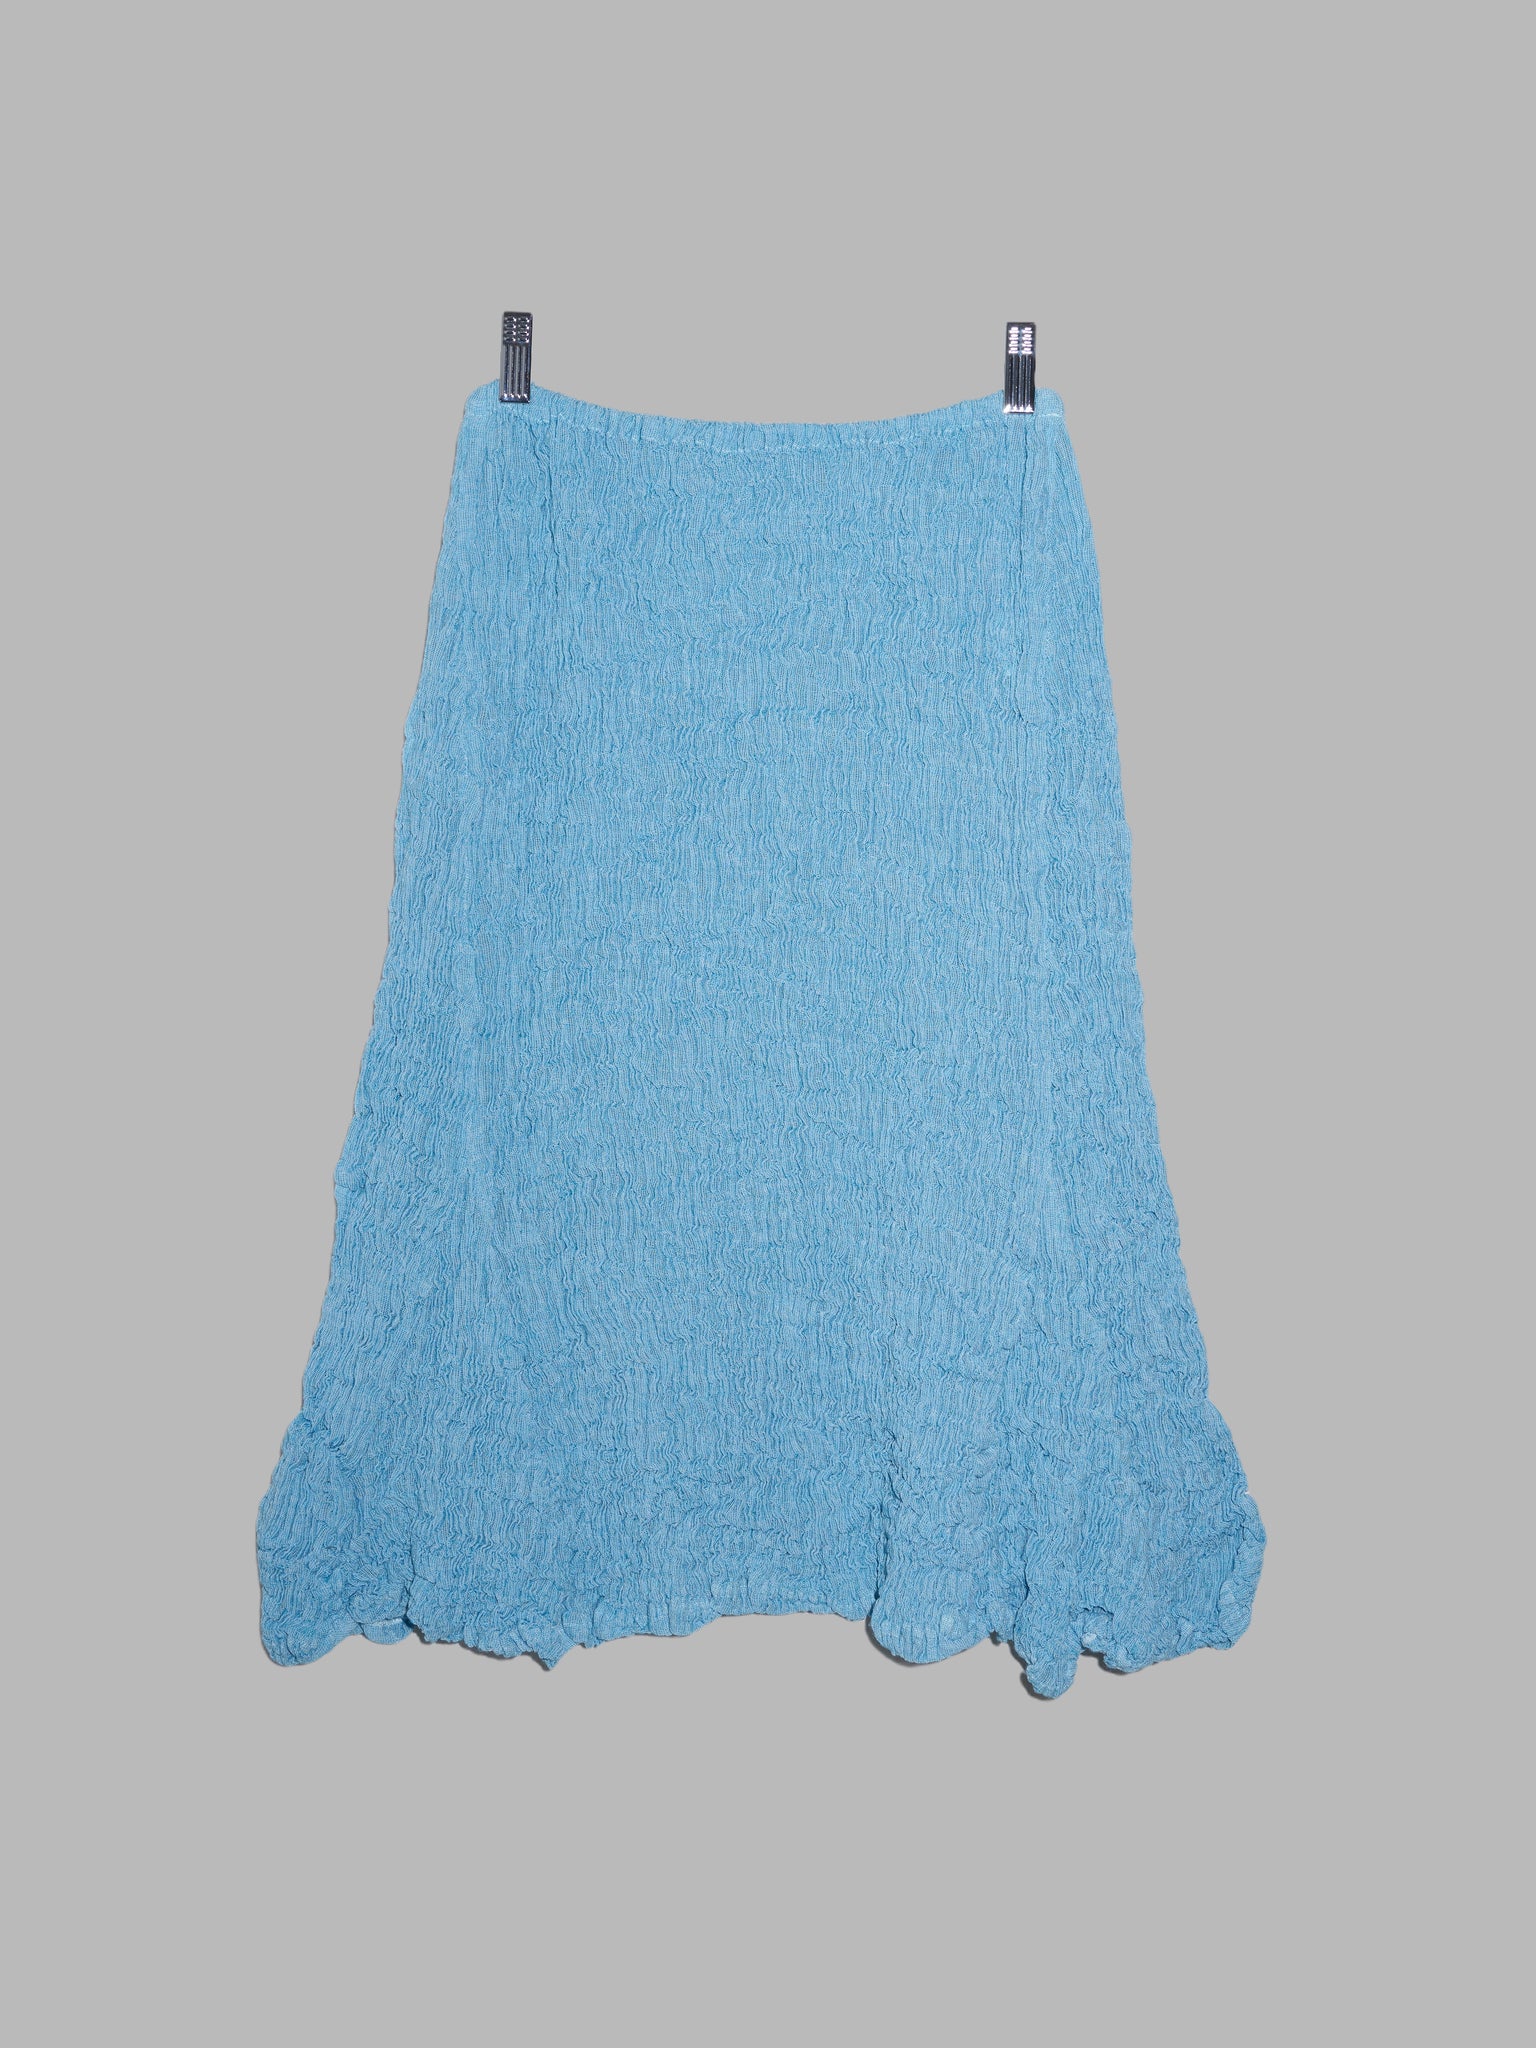 Kyoichi Fujita blue poly cotton wrinkled gauze t-shirt and skirt set - size 38